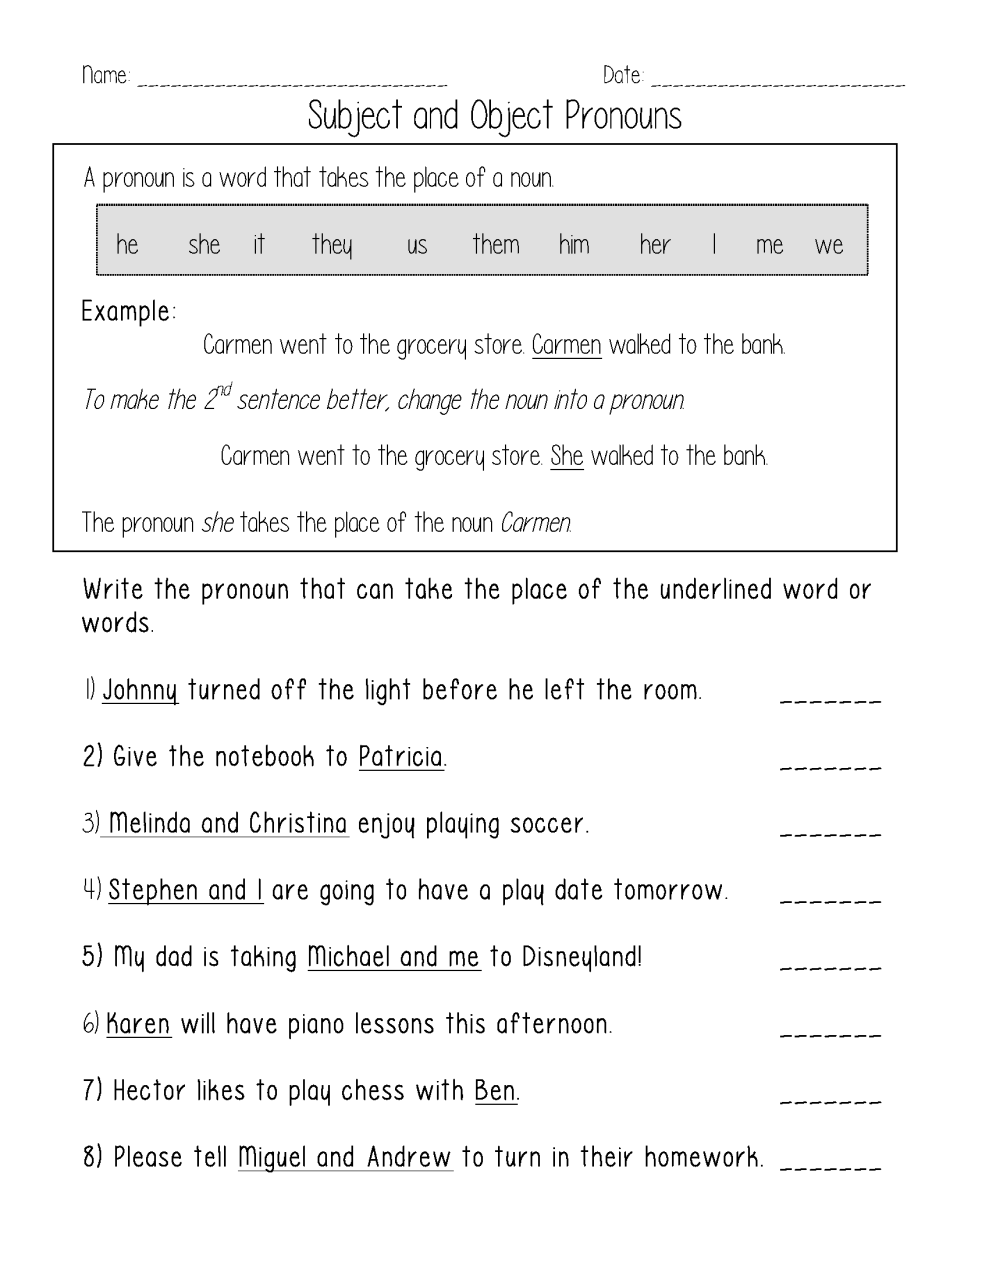 personal-pronouns-worksheet-grade-6-kidsworksheetfun